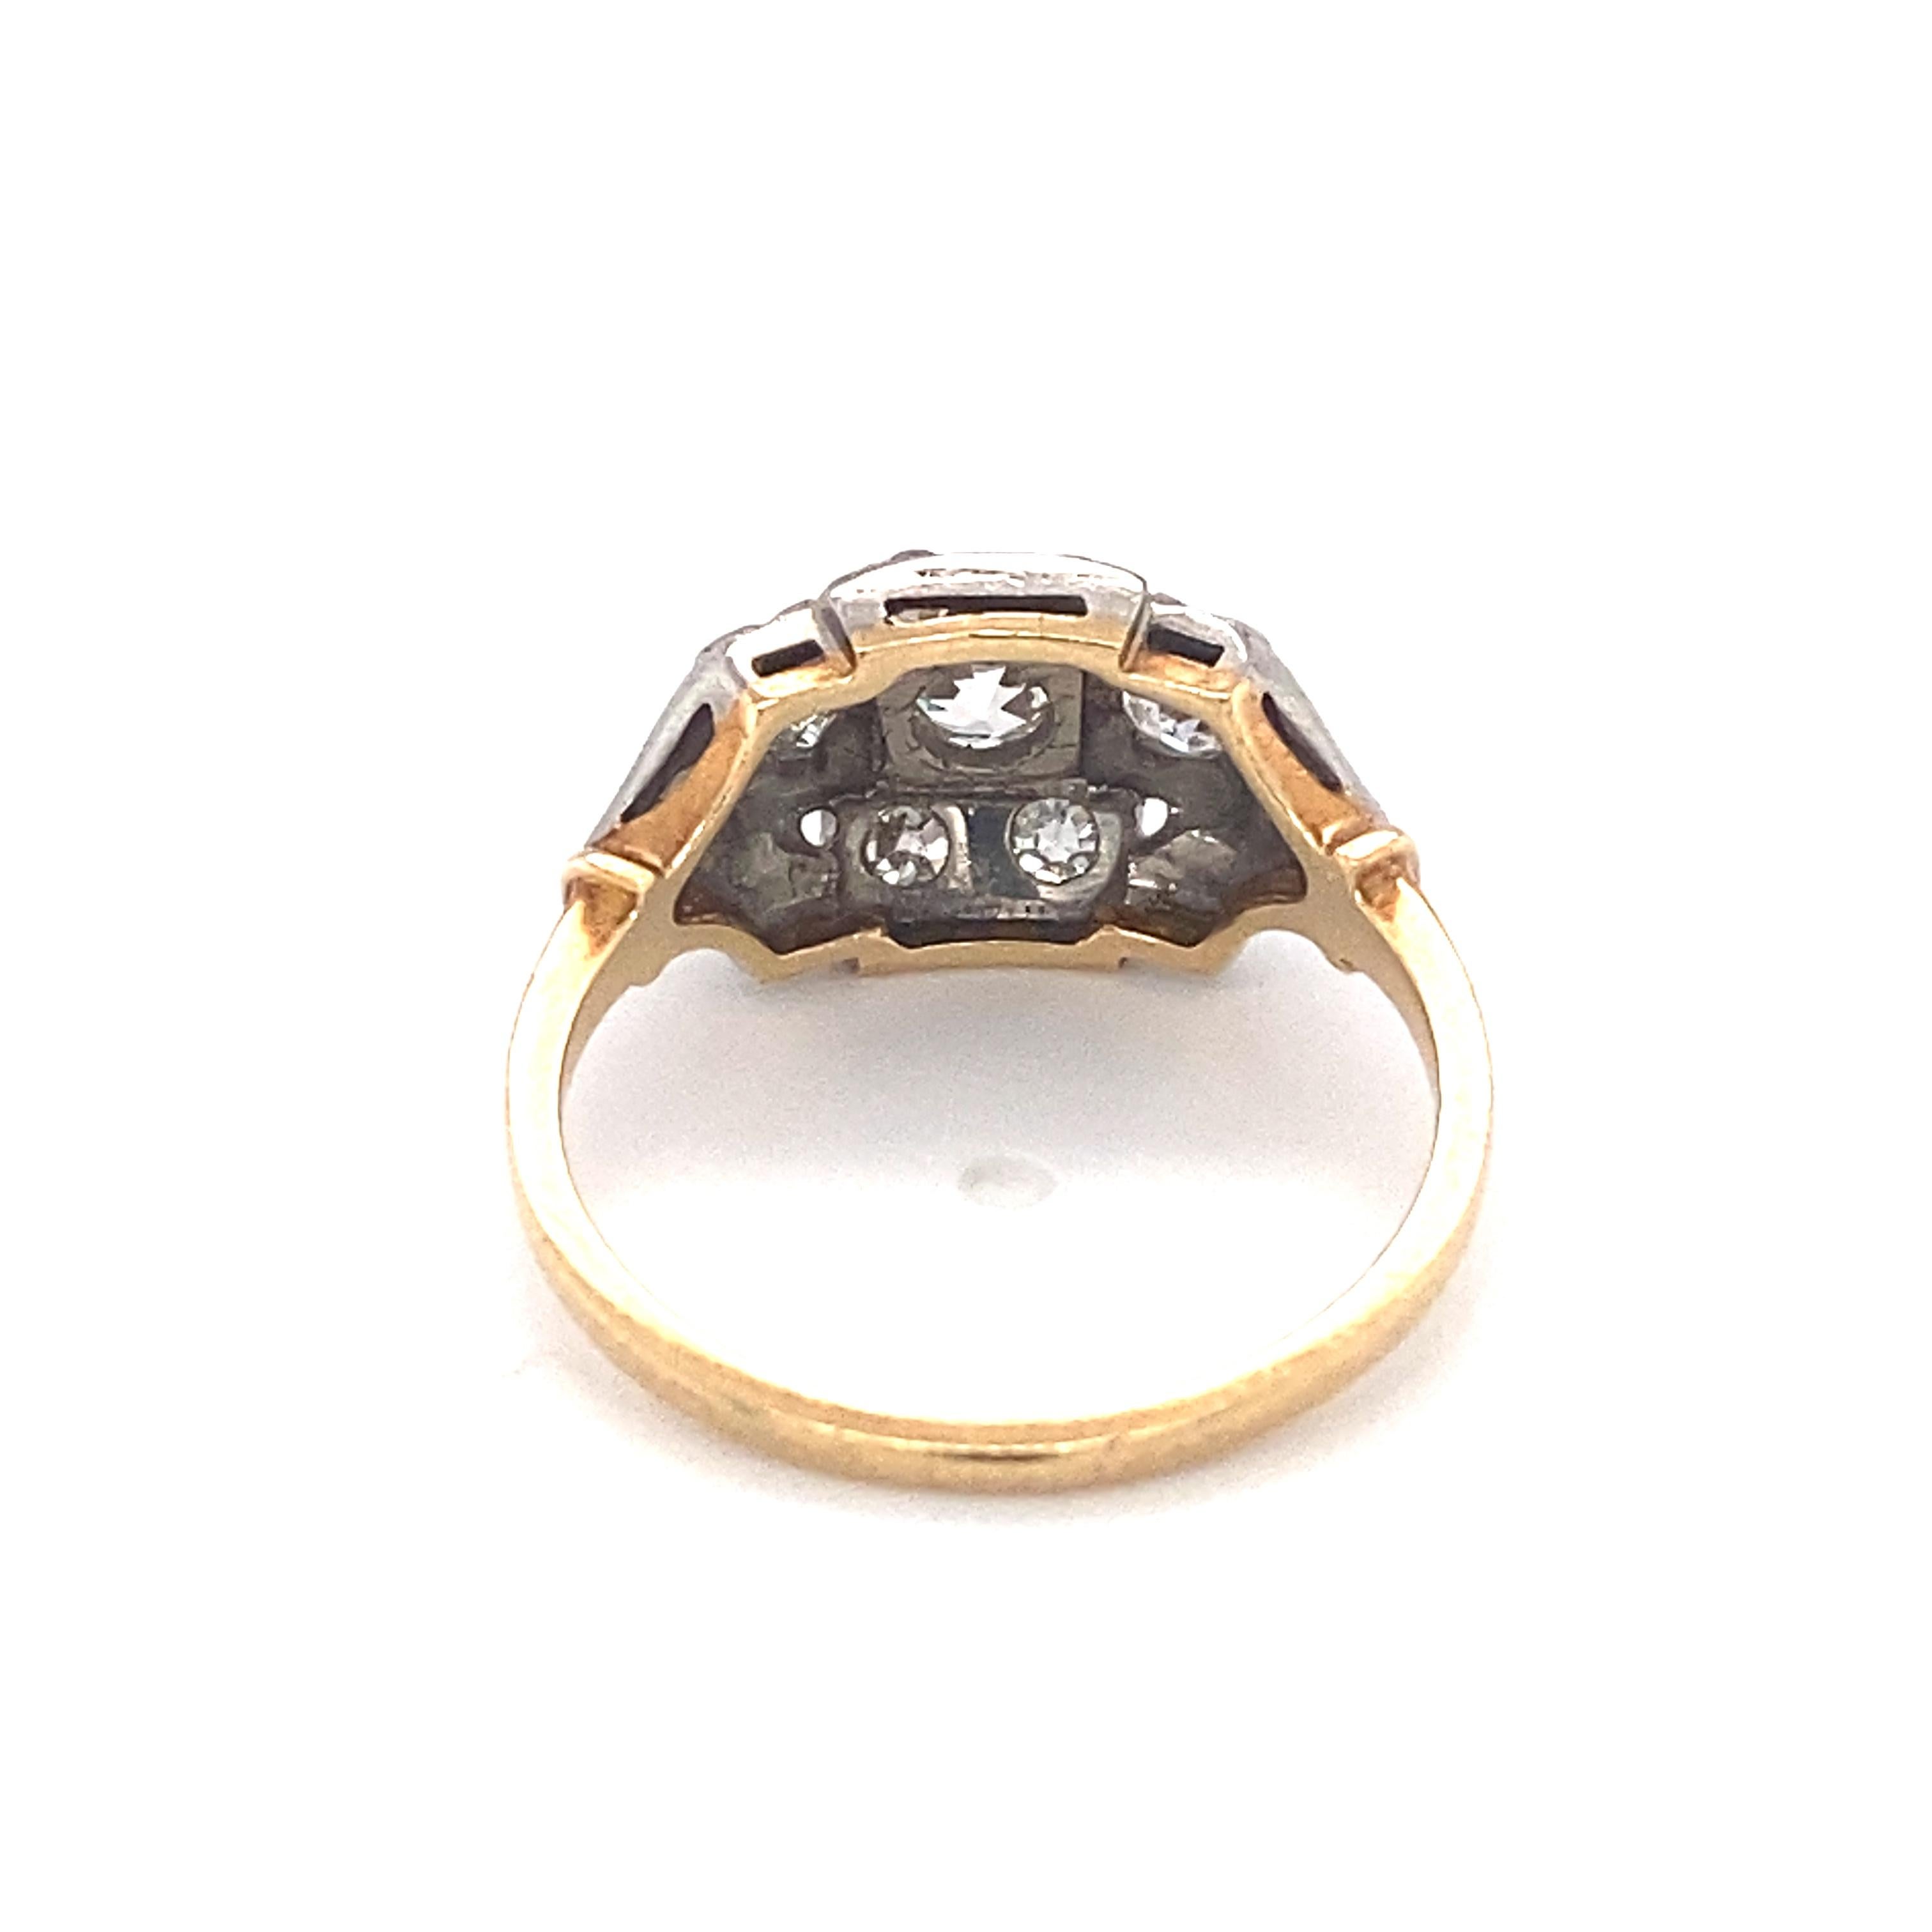 circa 1920s Art Deco Jabel 1 Carat Diamond Ring in Two Tone 14K Gold 1